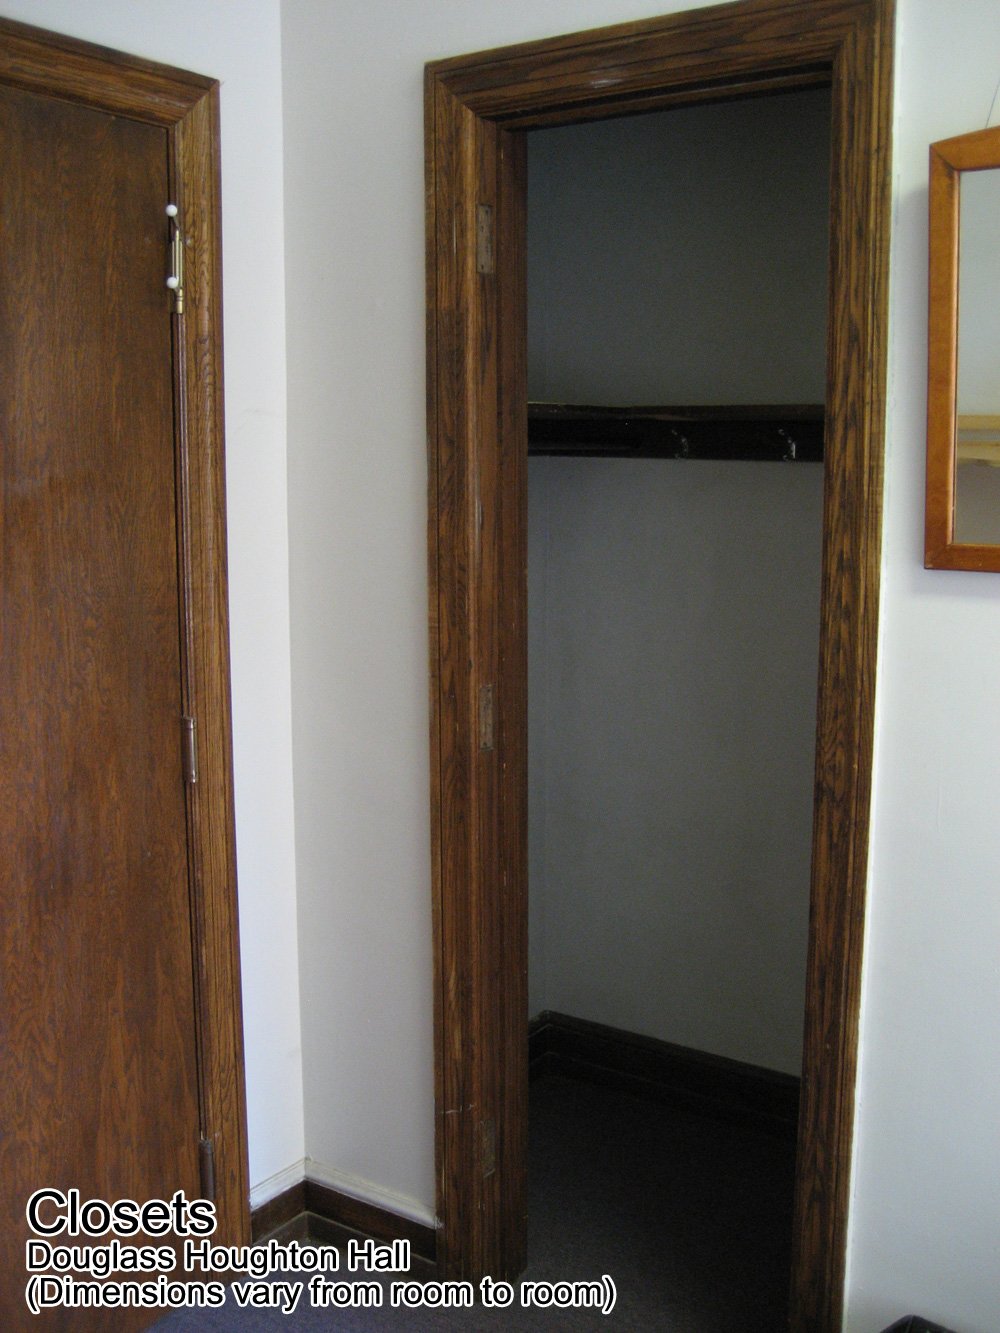 image of an empty closet